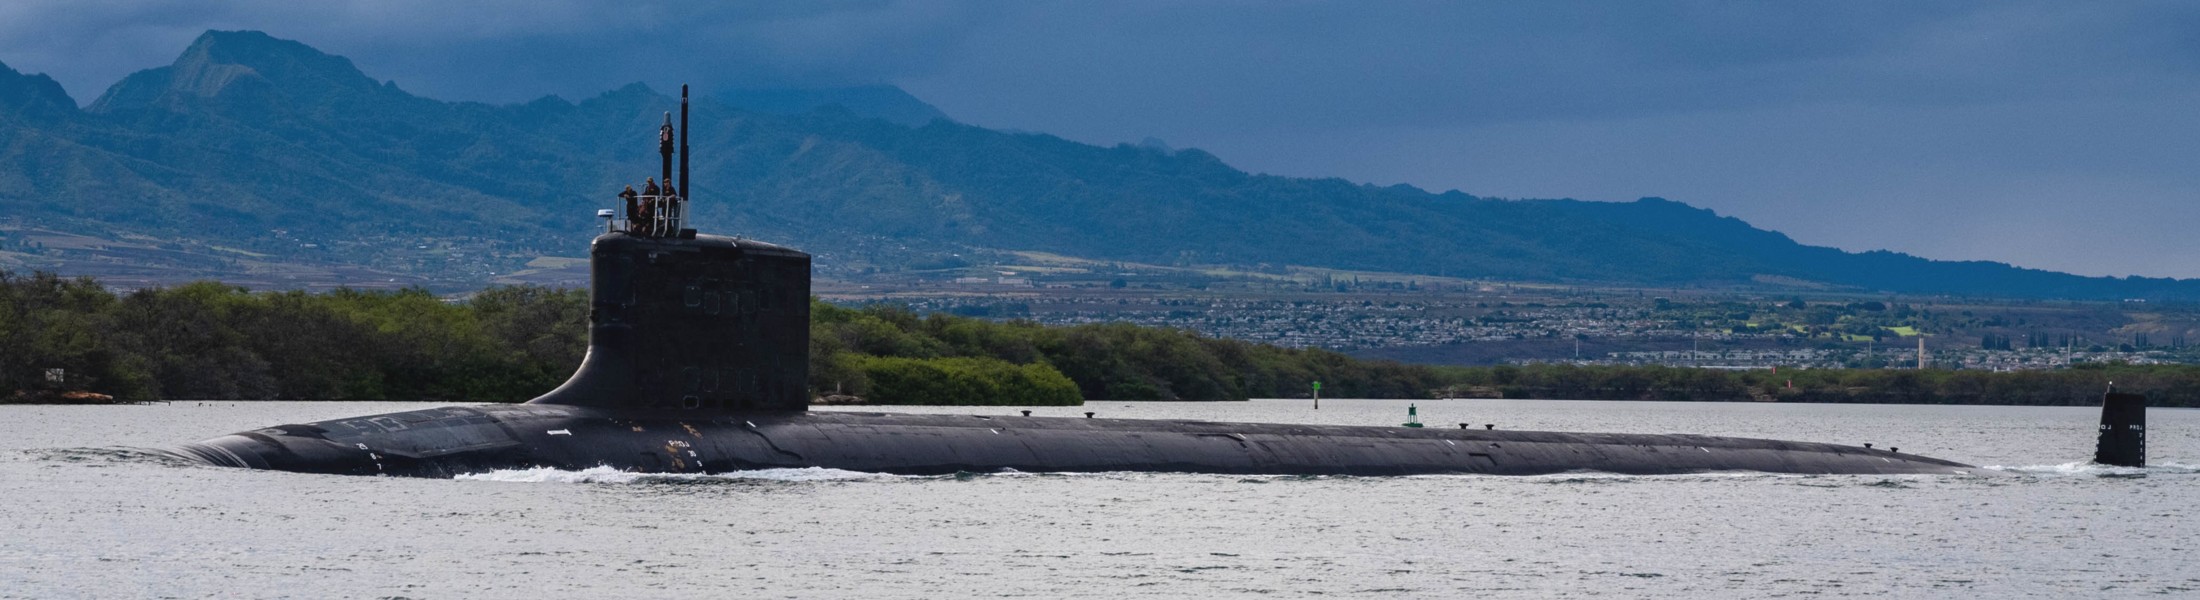 ssn-780 uss missouri virginia class attack submarine us navy 63 pearl harbor hawaii